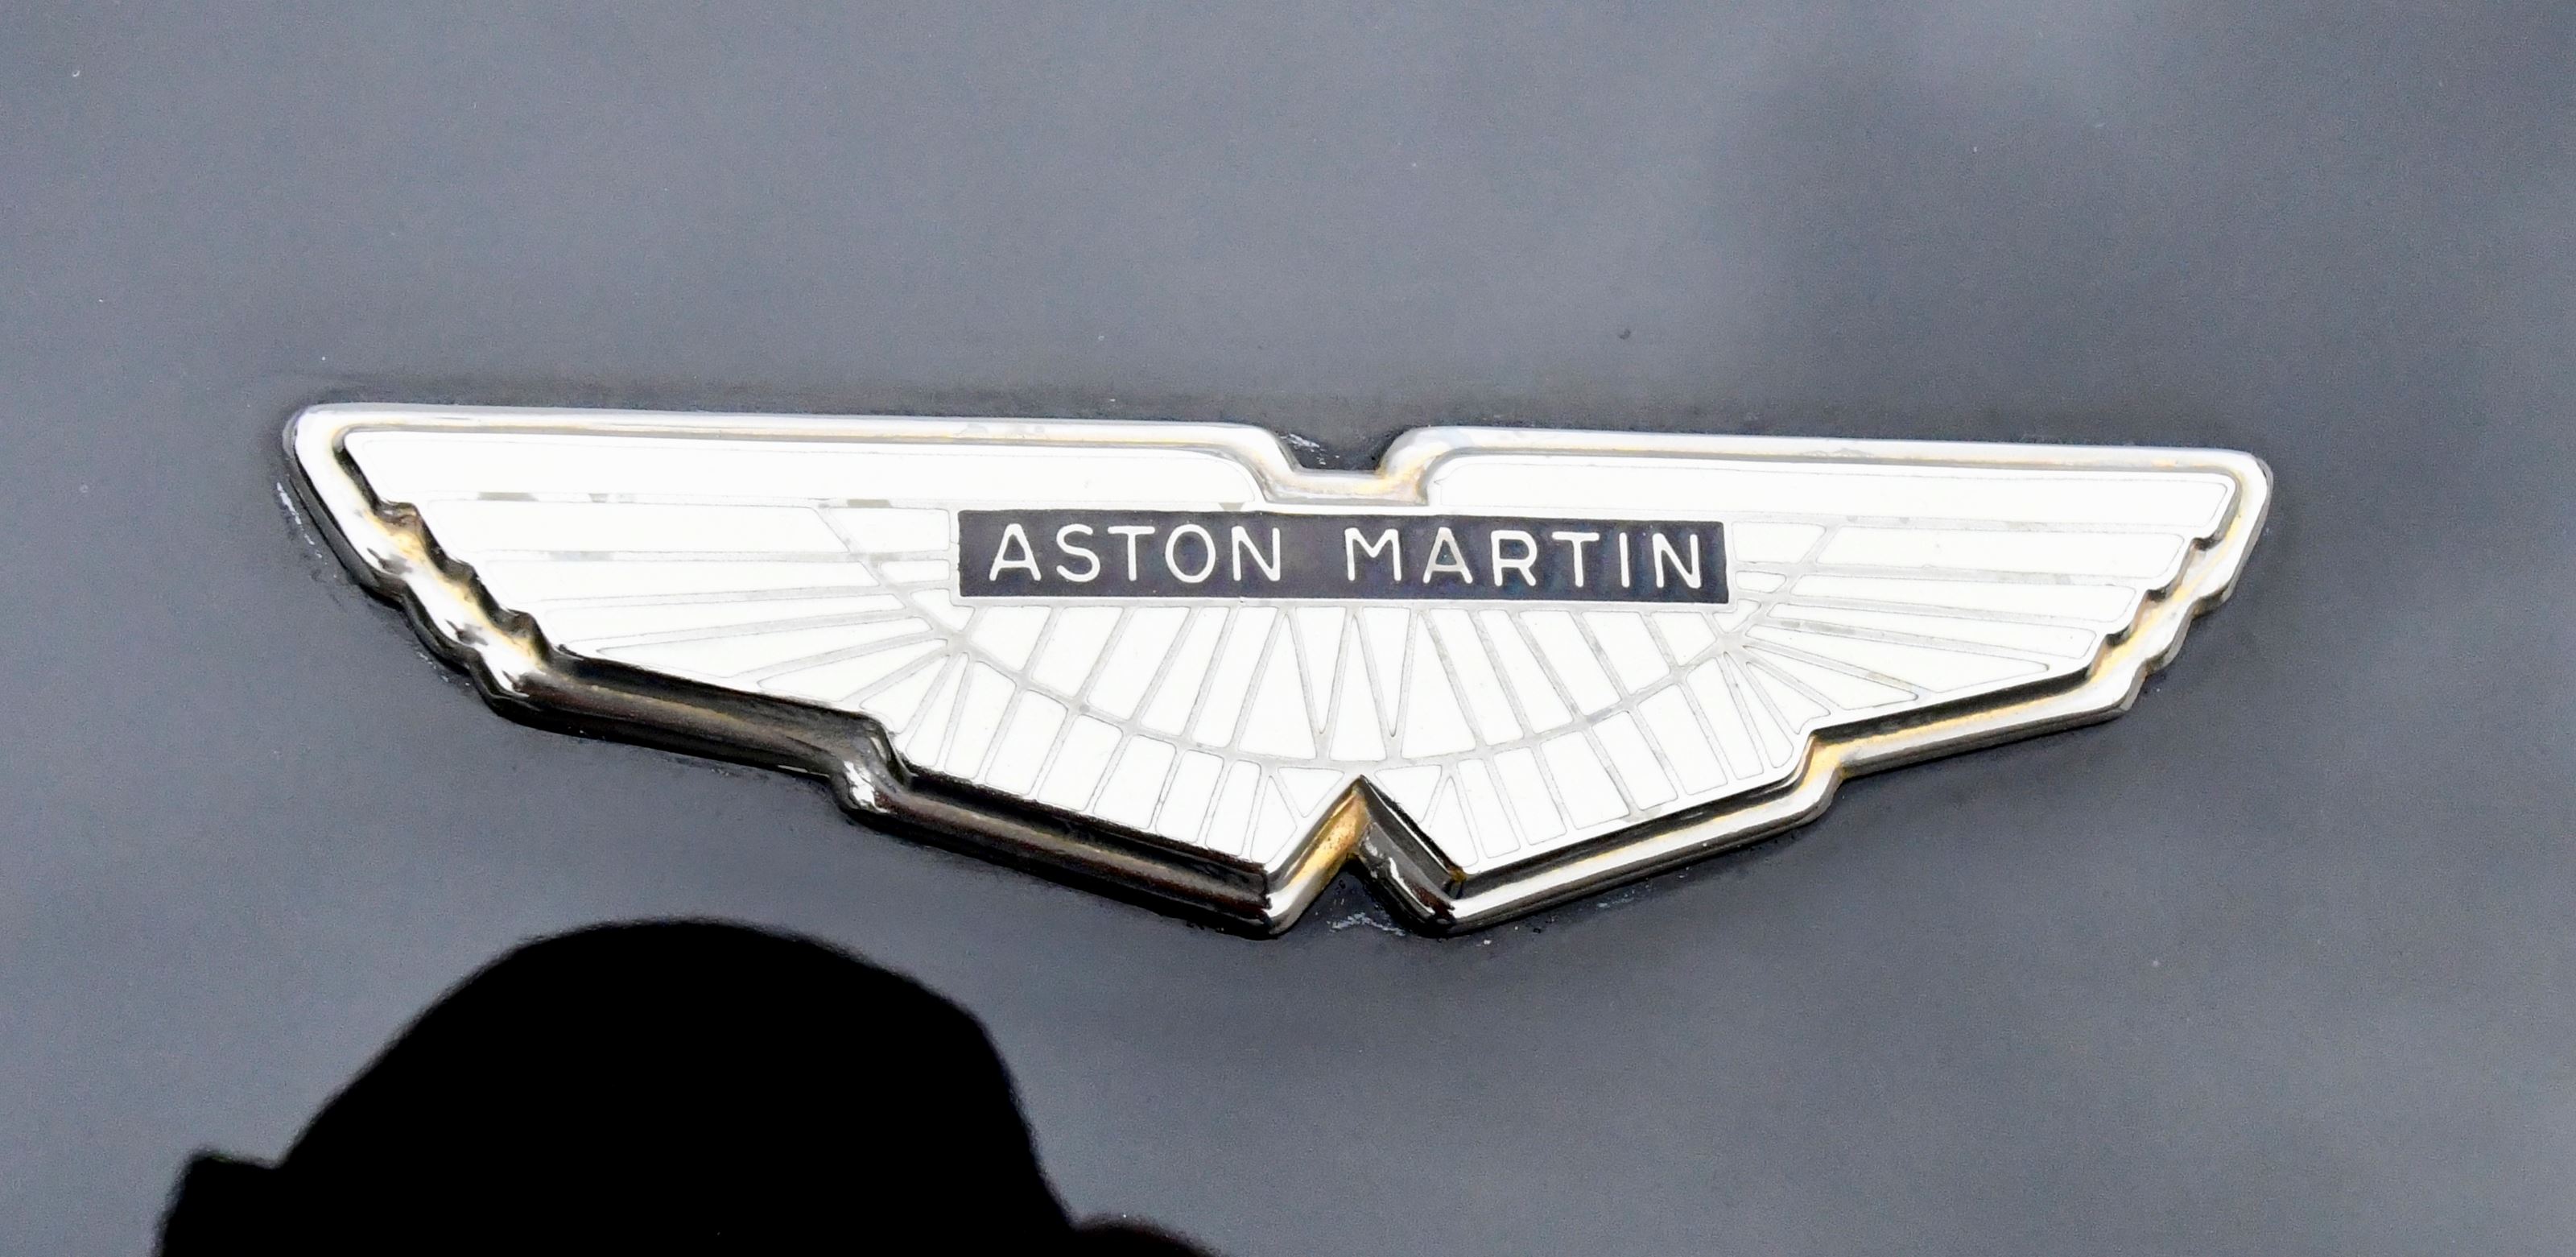 Aston martin v8  volante left hand drive automatic  lxtmqtgxeve5ecaw0euap